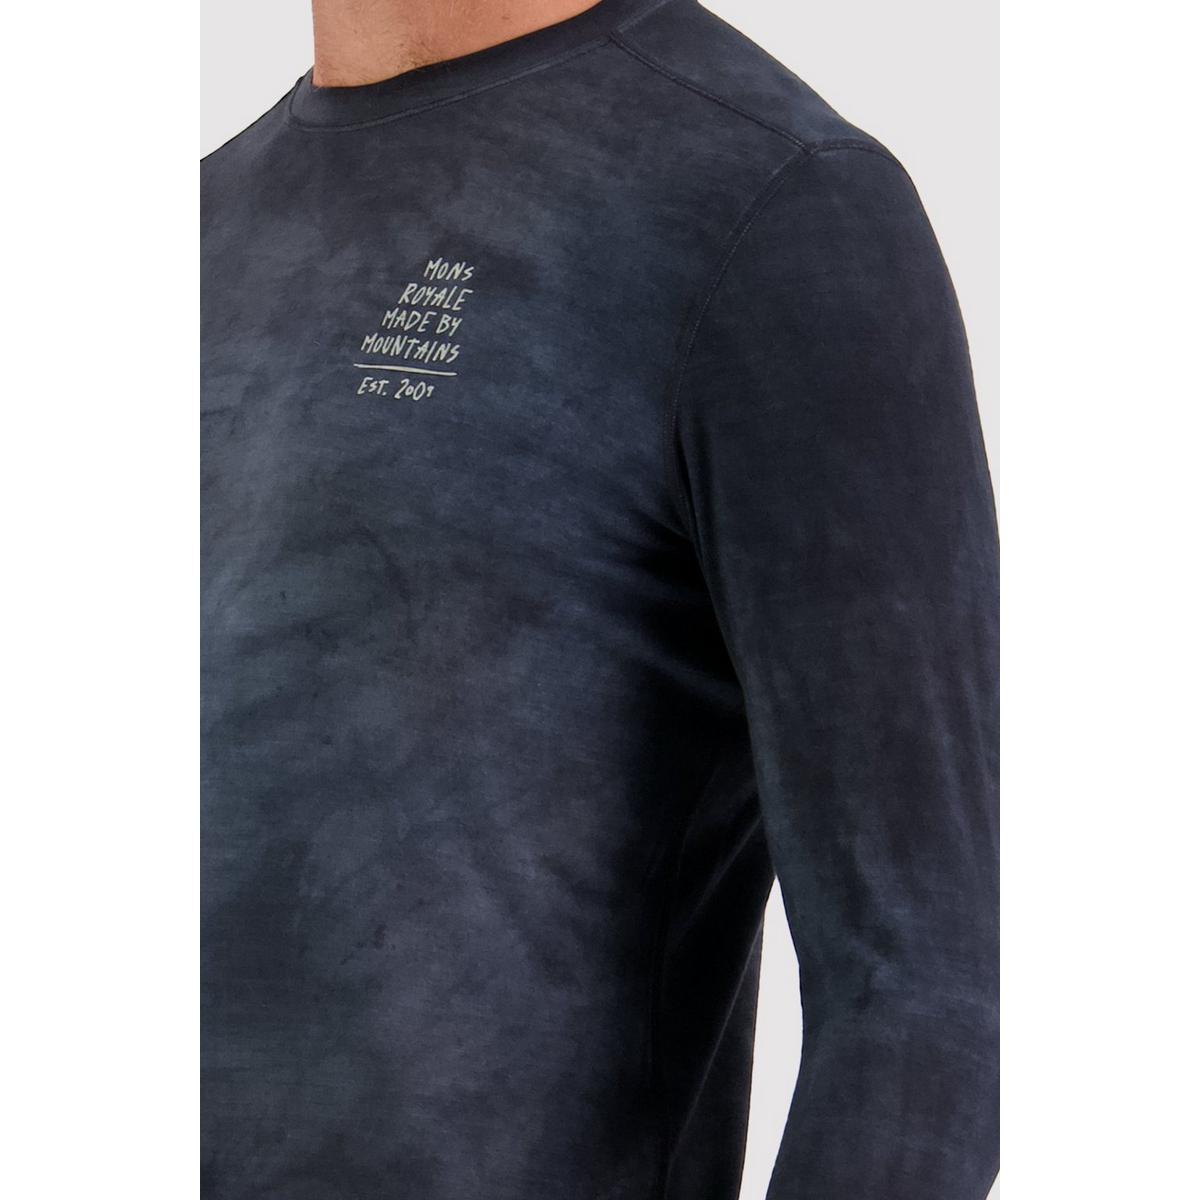 Mons Royale Men's Cascade Merino Flex 200 Long Sleeve - Black Storm Wash